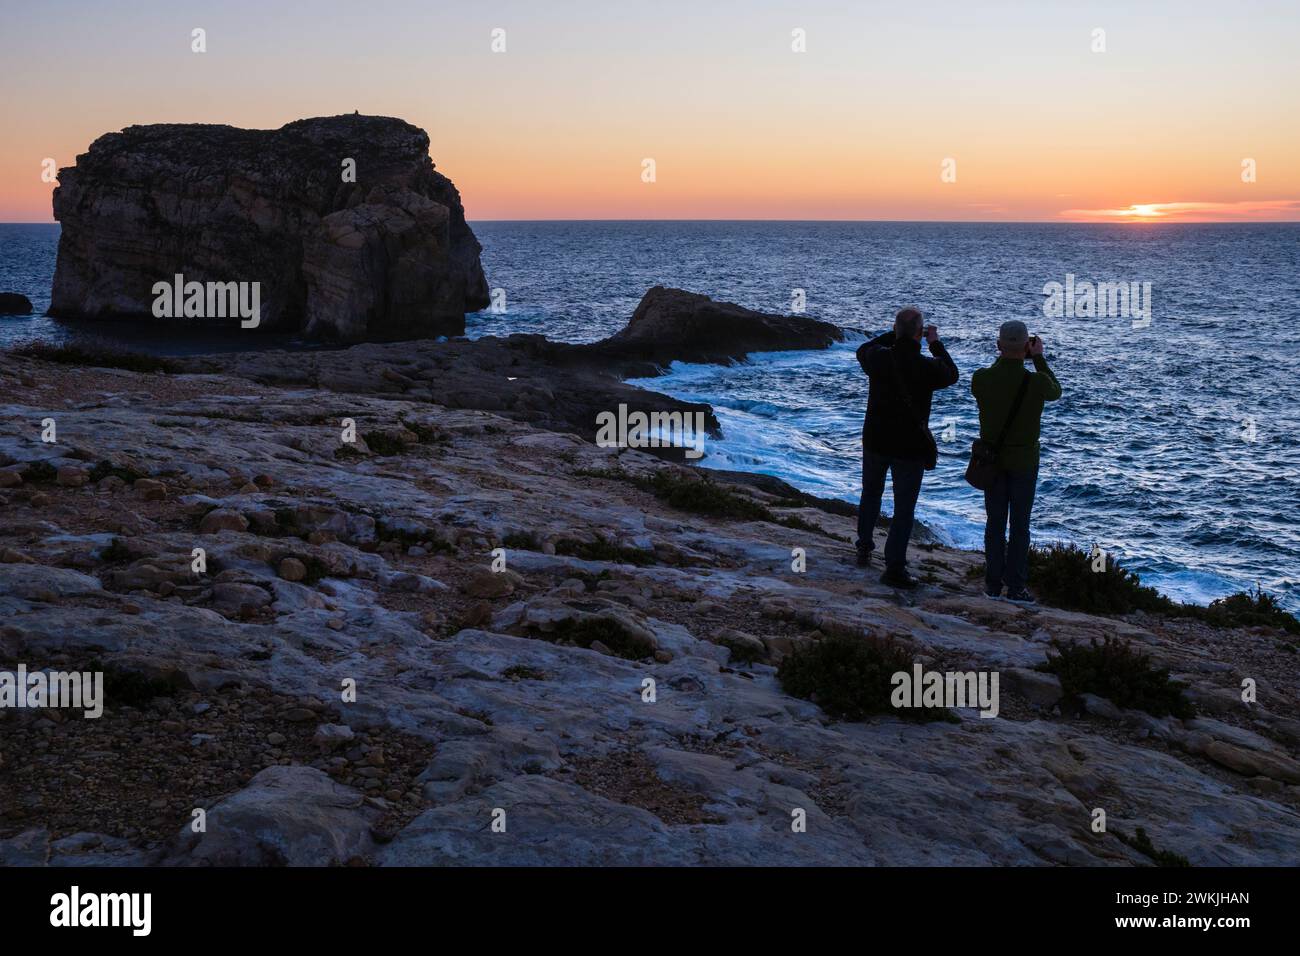 Tourists photographing the sunset at Fungus Rock, Dwejra Bay, Gozo, Malta Stock Photo